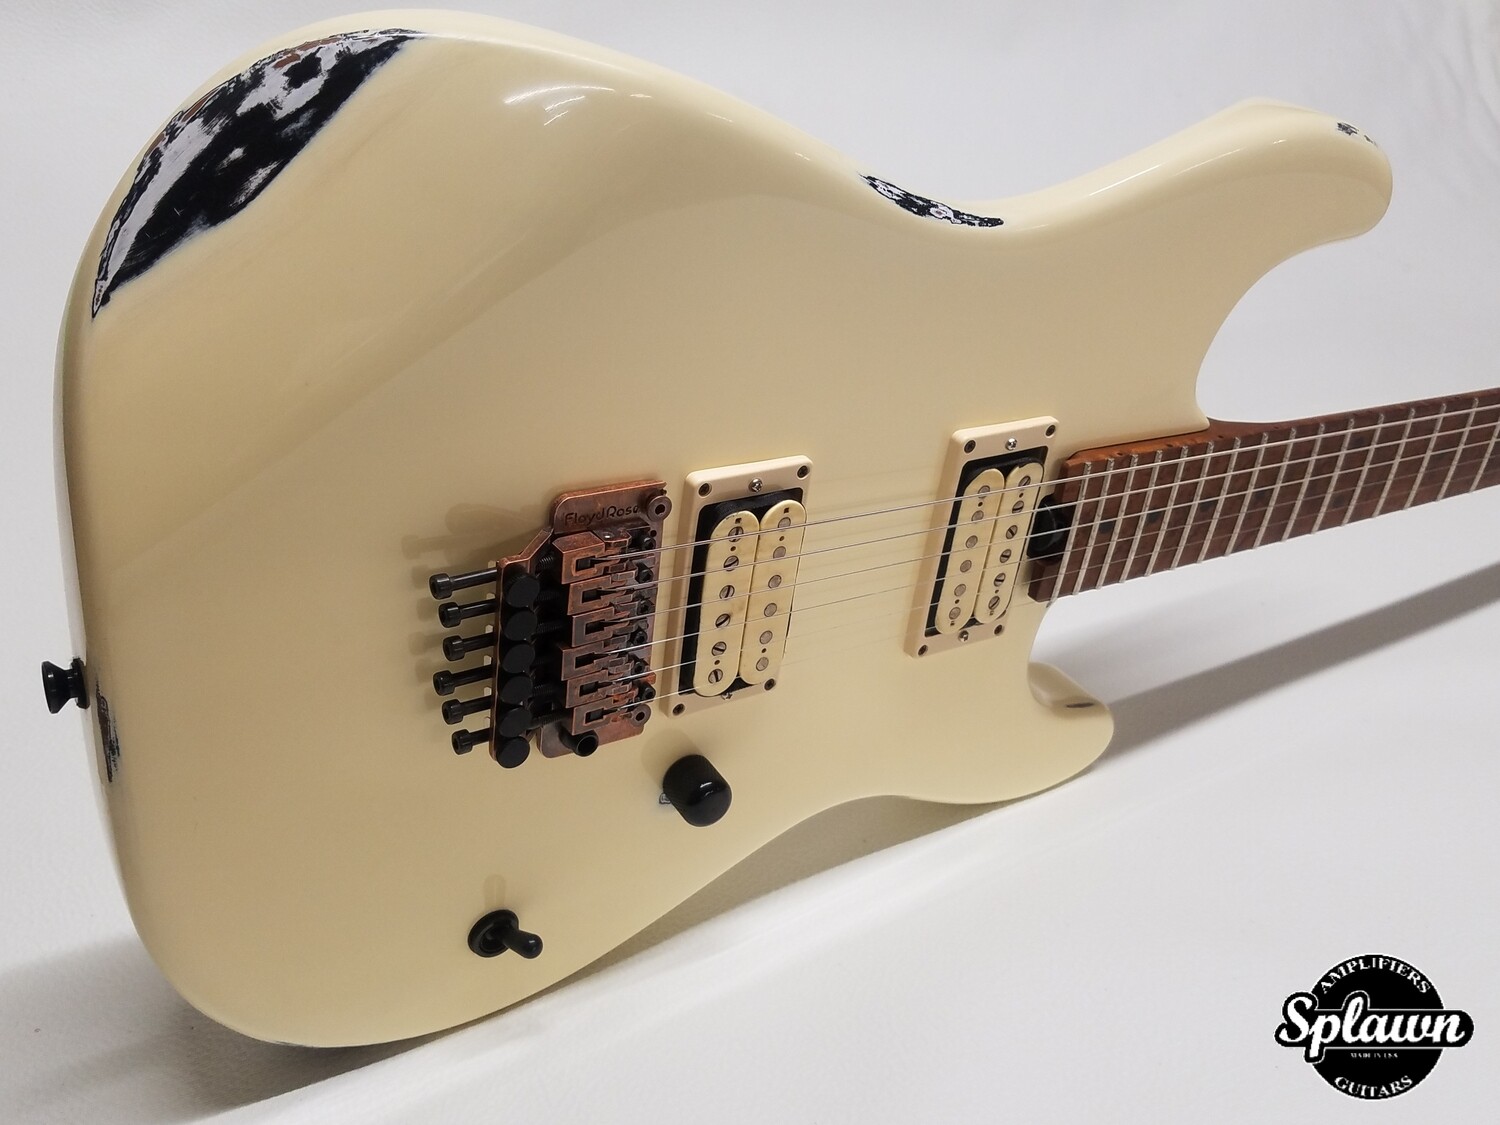 Splawn SS1 Guitar 50% Deposit Custom Order